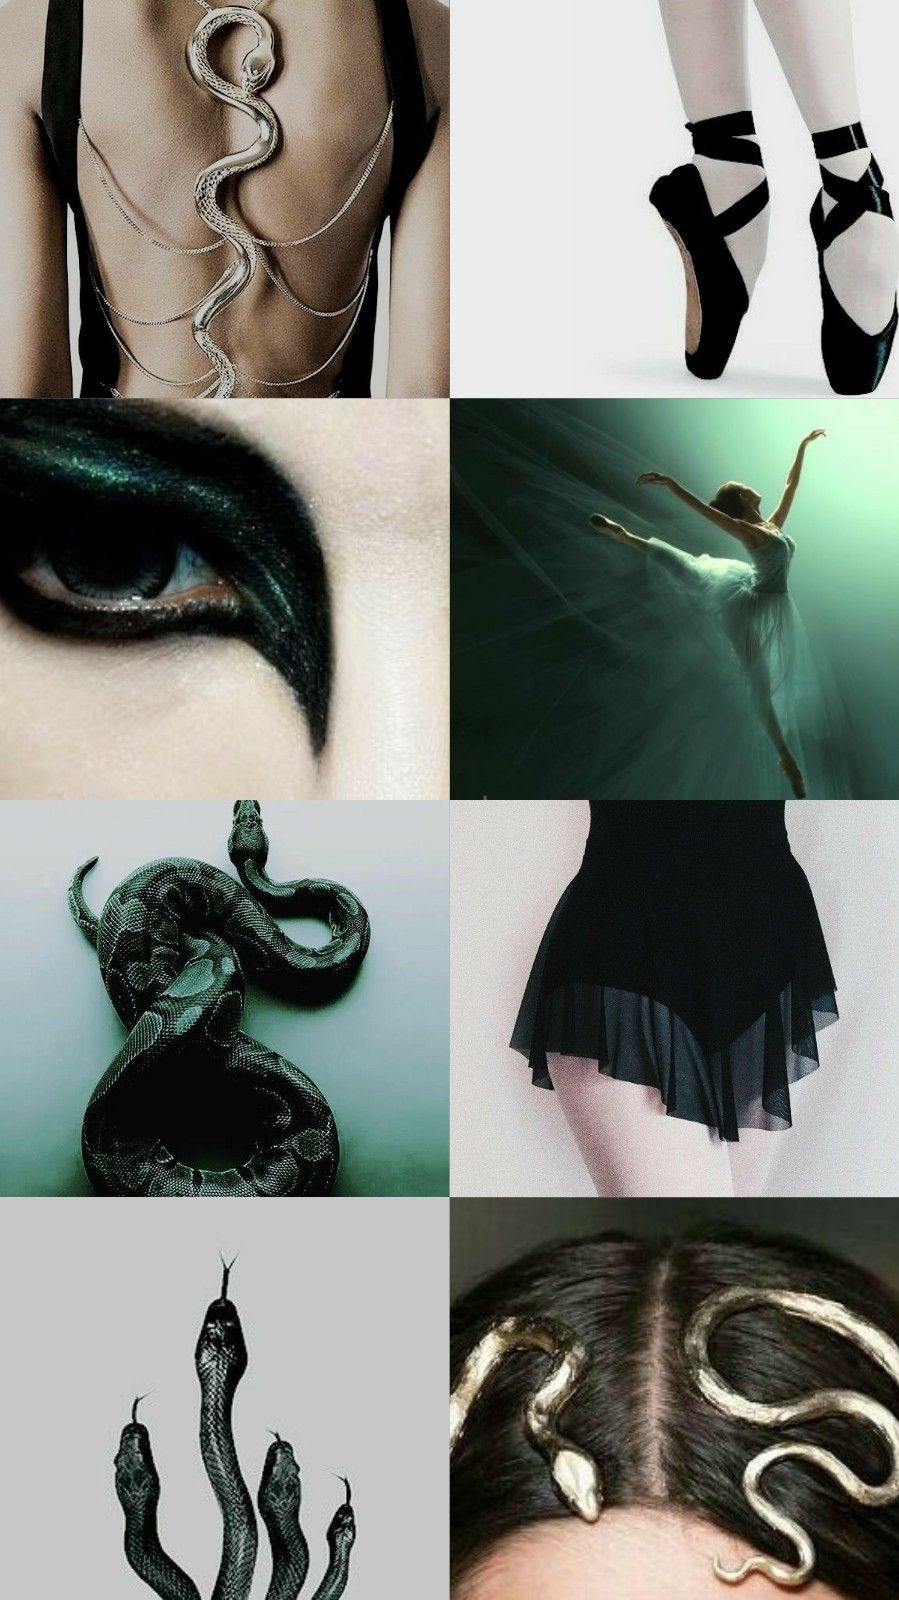 Aesthetic for the character of Medusa from Greek mythology. - Ballet, Slytherin